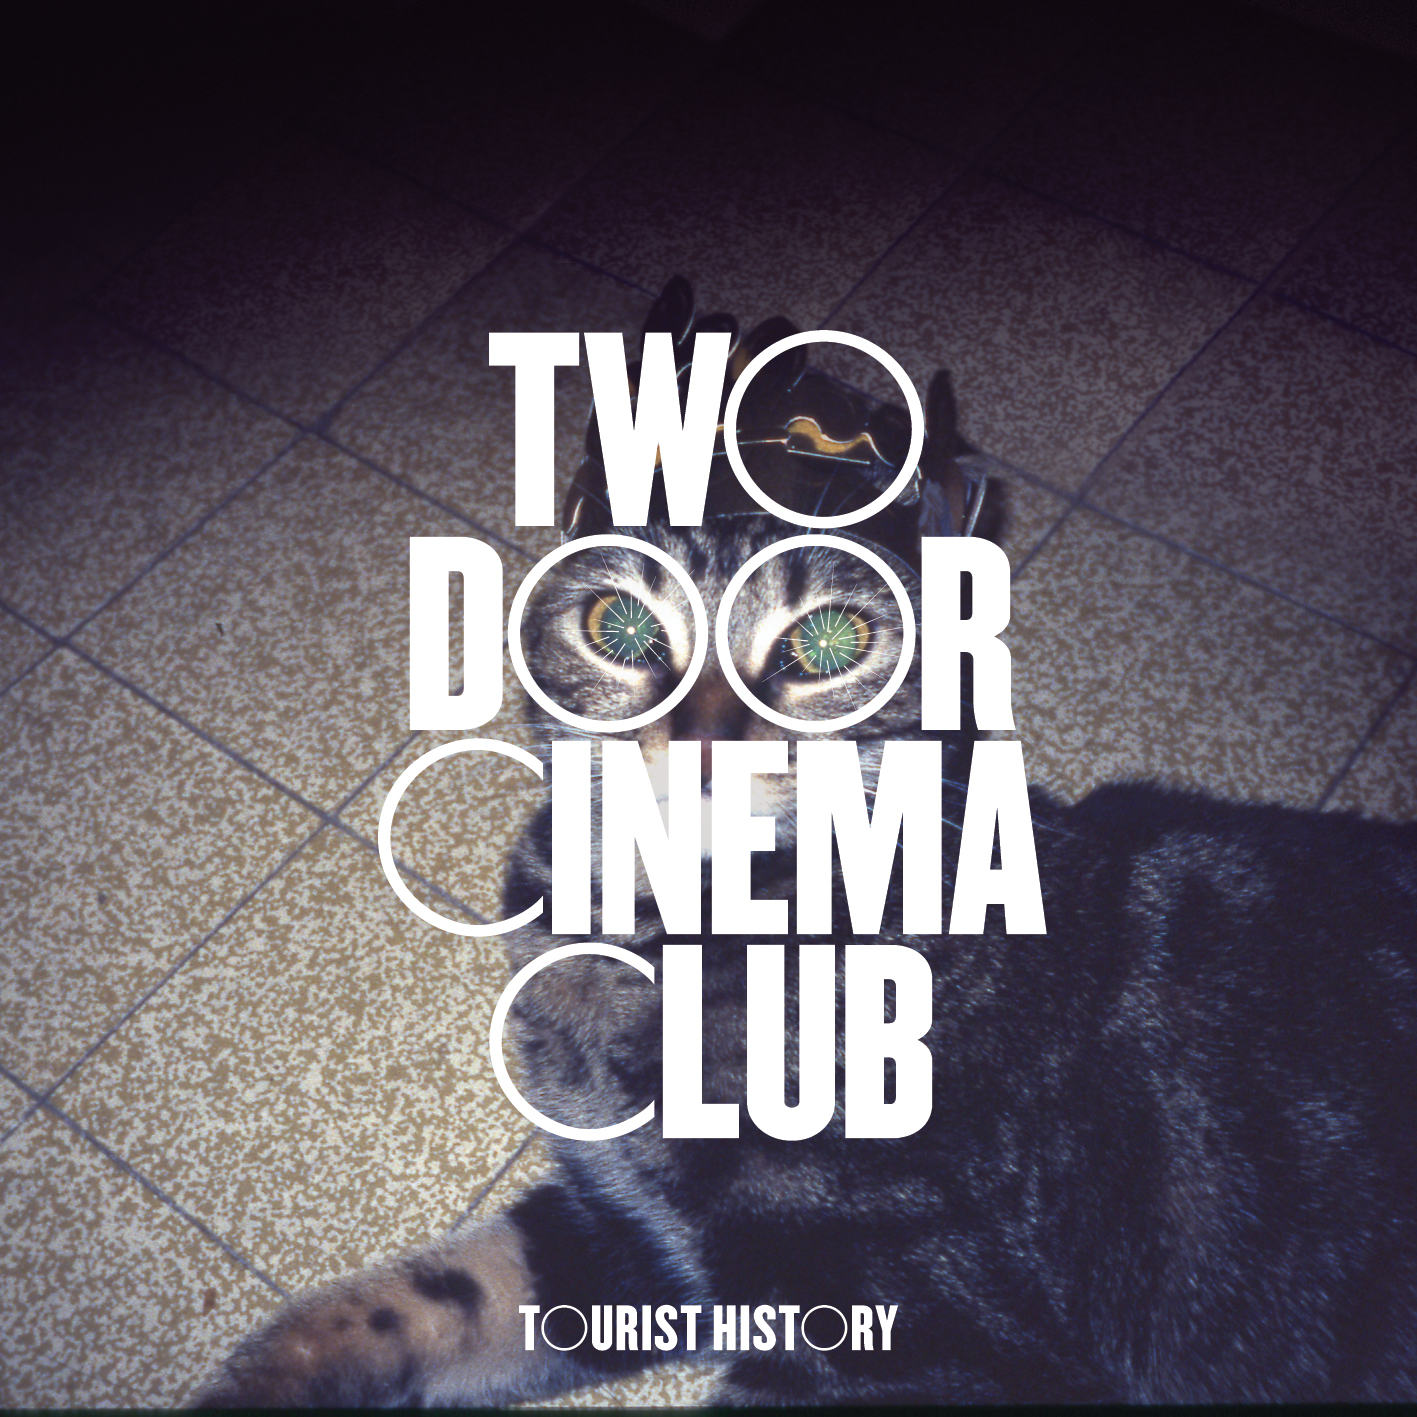 two_door_cinema_club_-_tourist_history